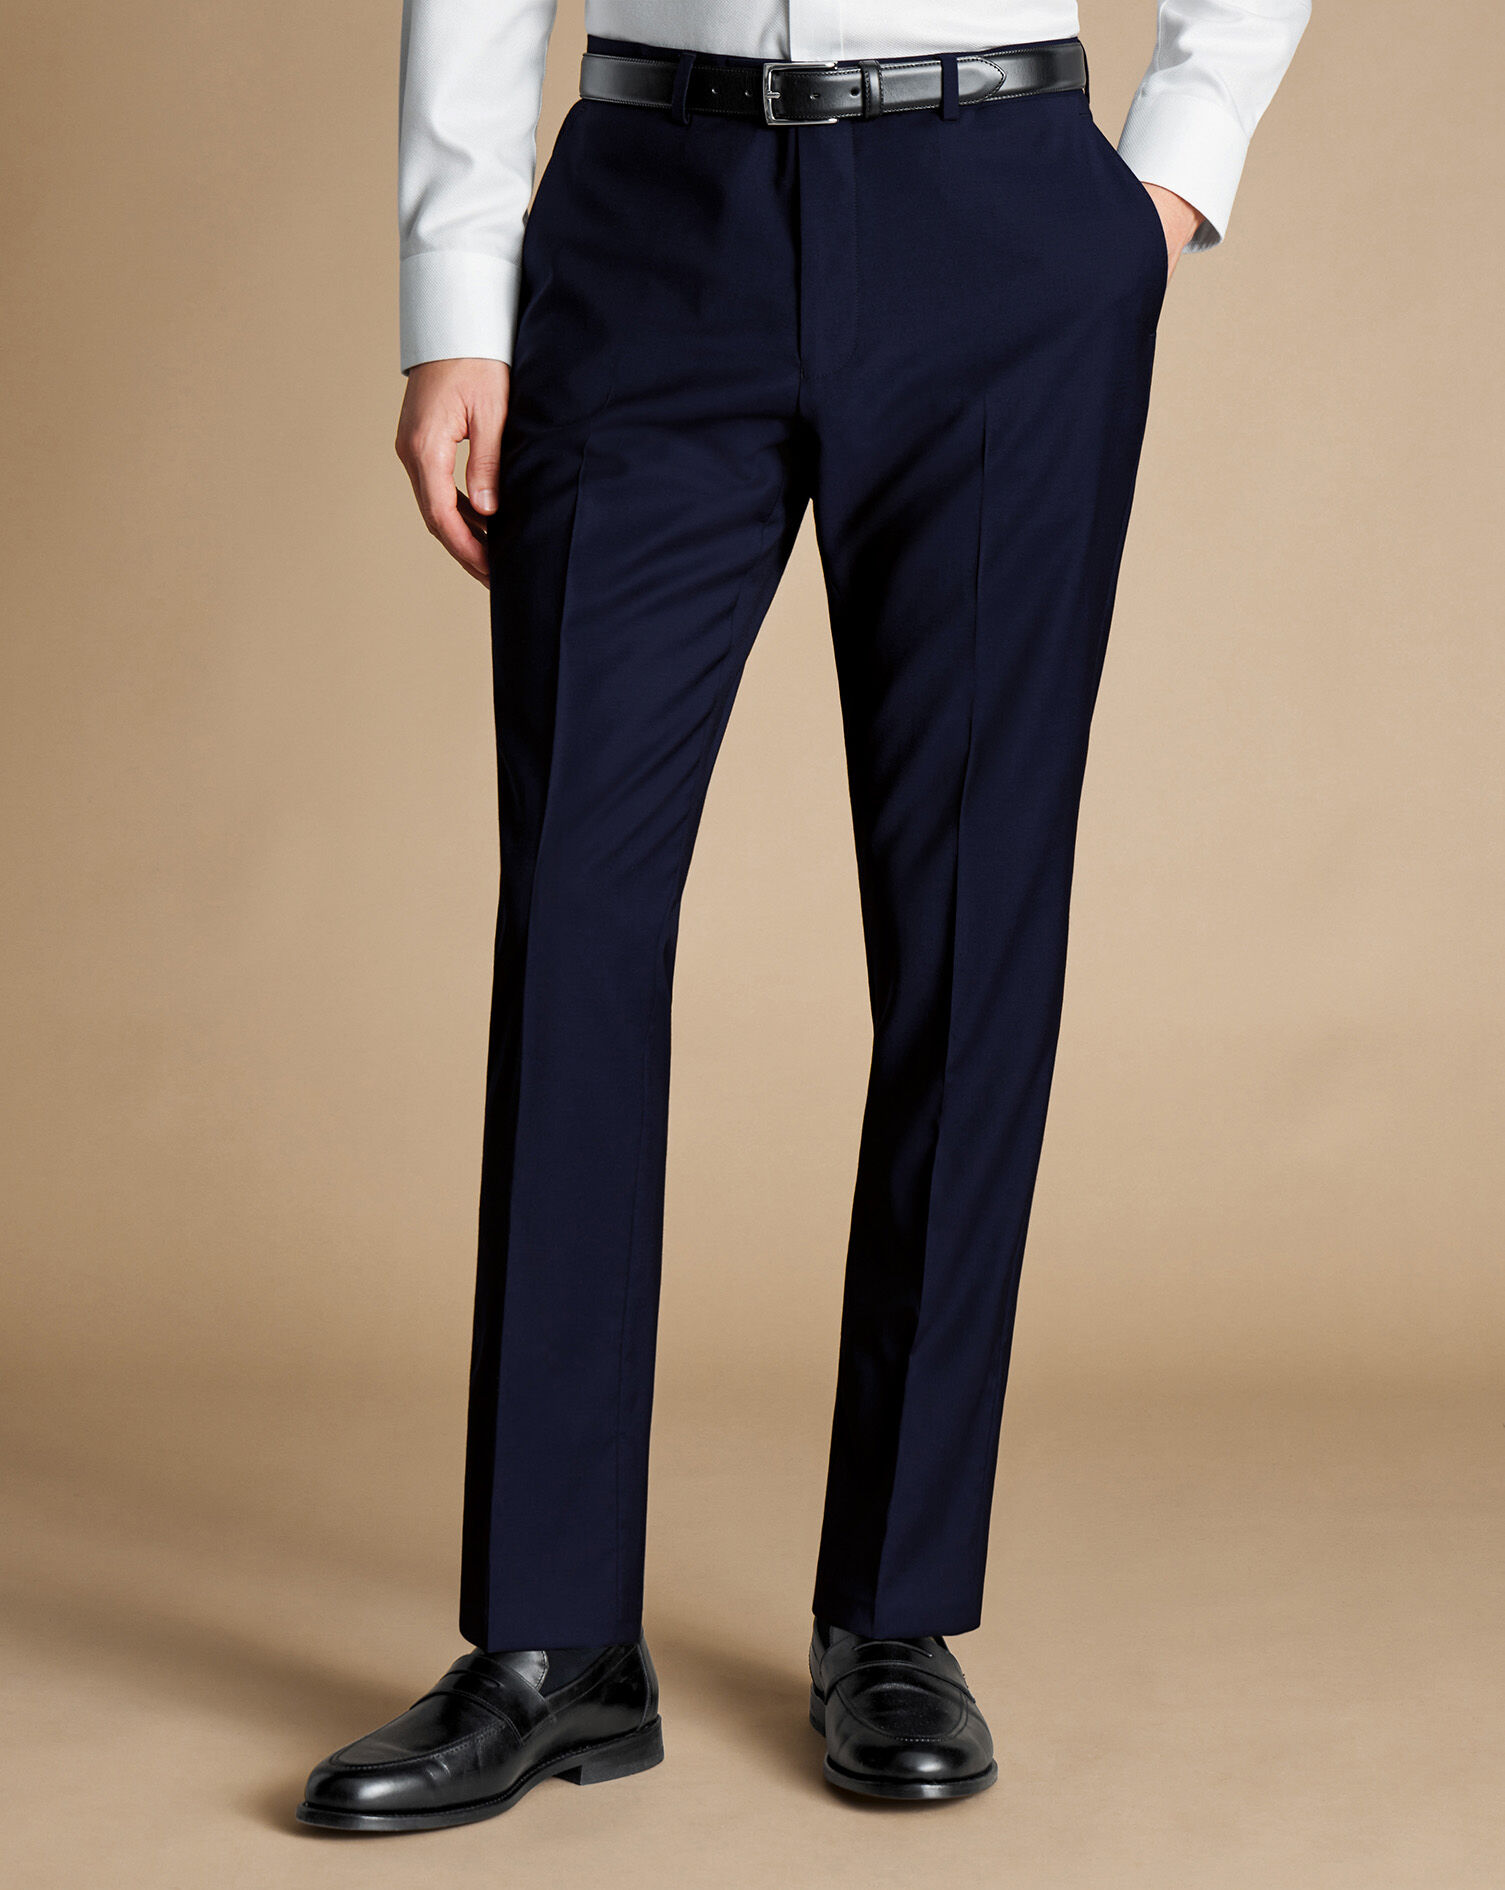 Brglopf Men's Stretch Dress Pants Slim Fit Skinny Suit Pants Business  Trousers Solid Color Suit Pants Work Office Trousers with Pockets -  Walmart.com